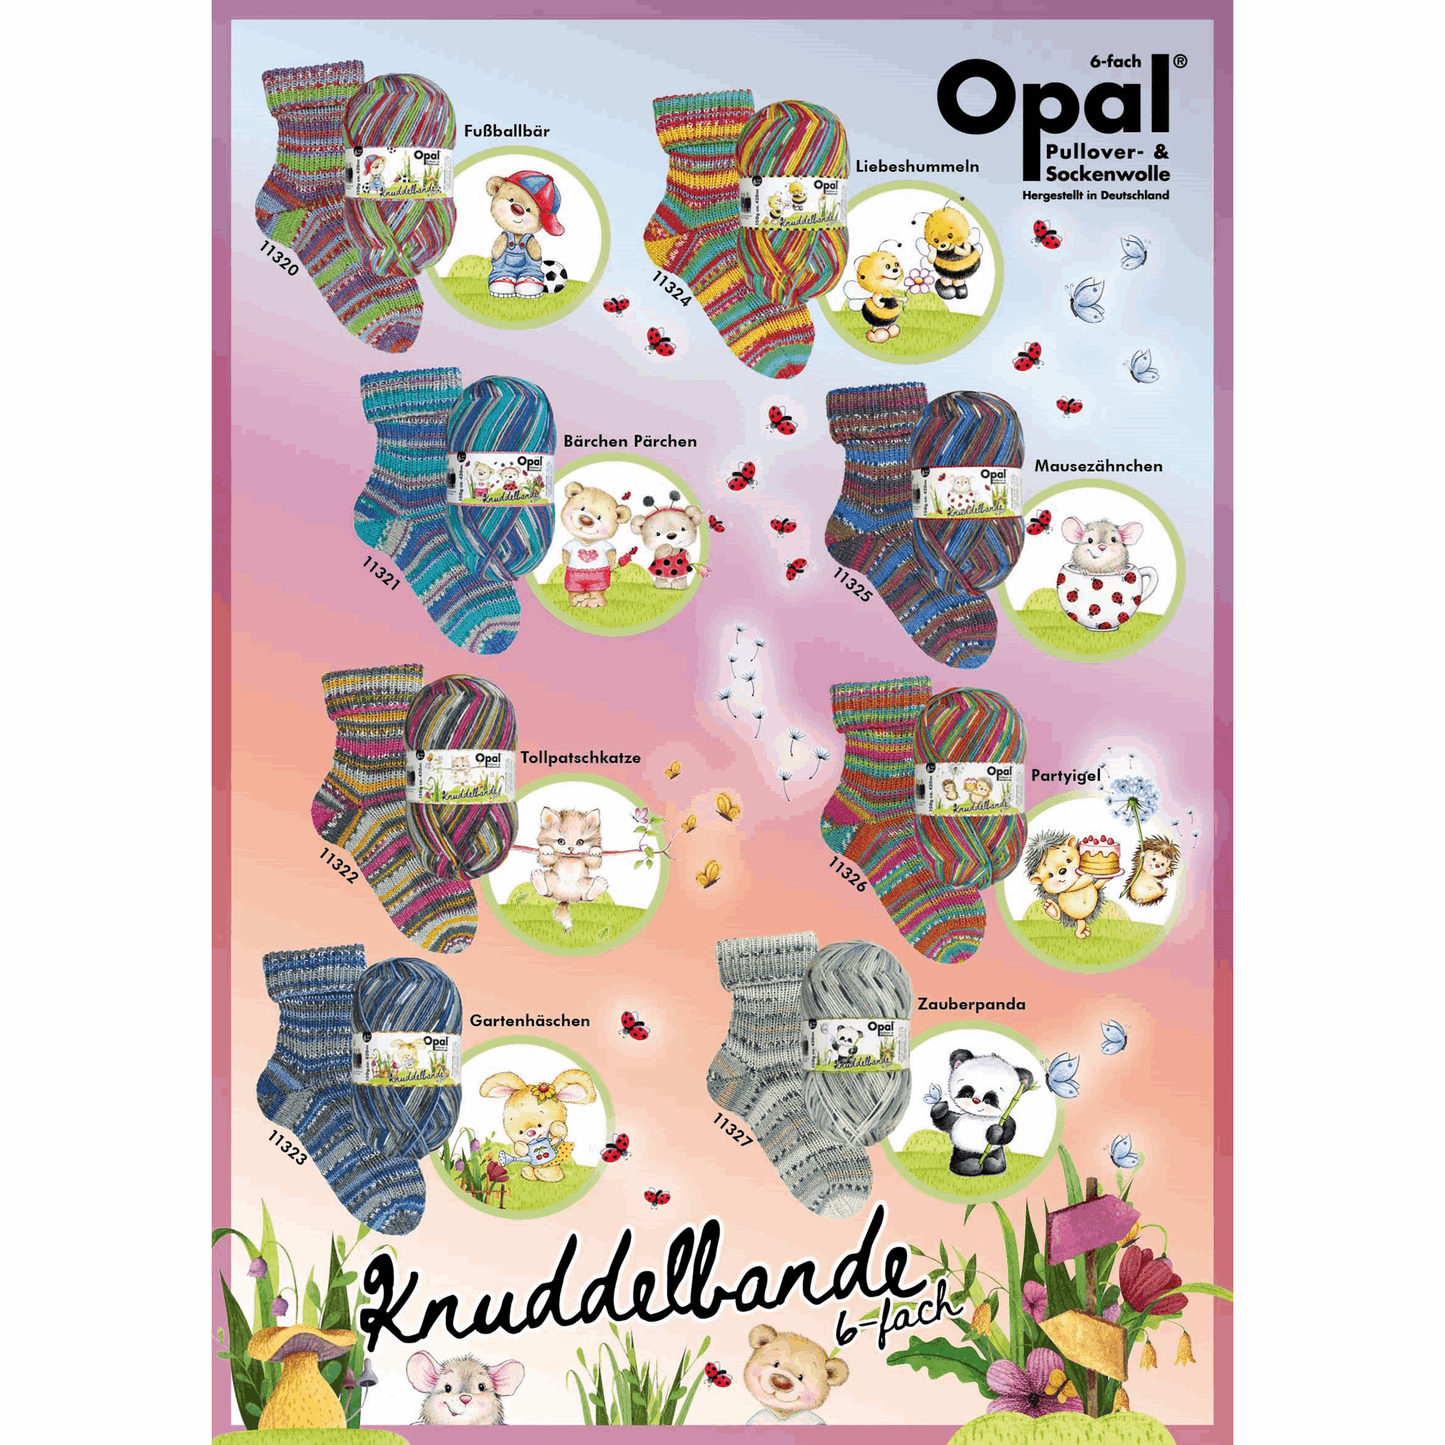 Opal cuddly ties 6-fold 150g, color garden bunny 11323